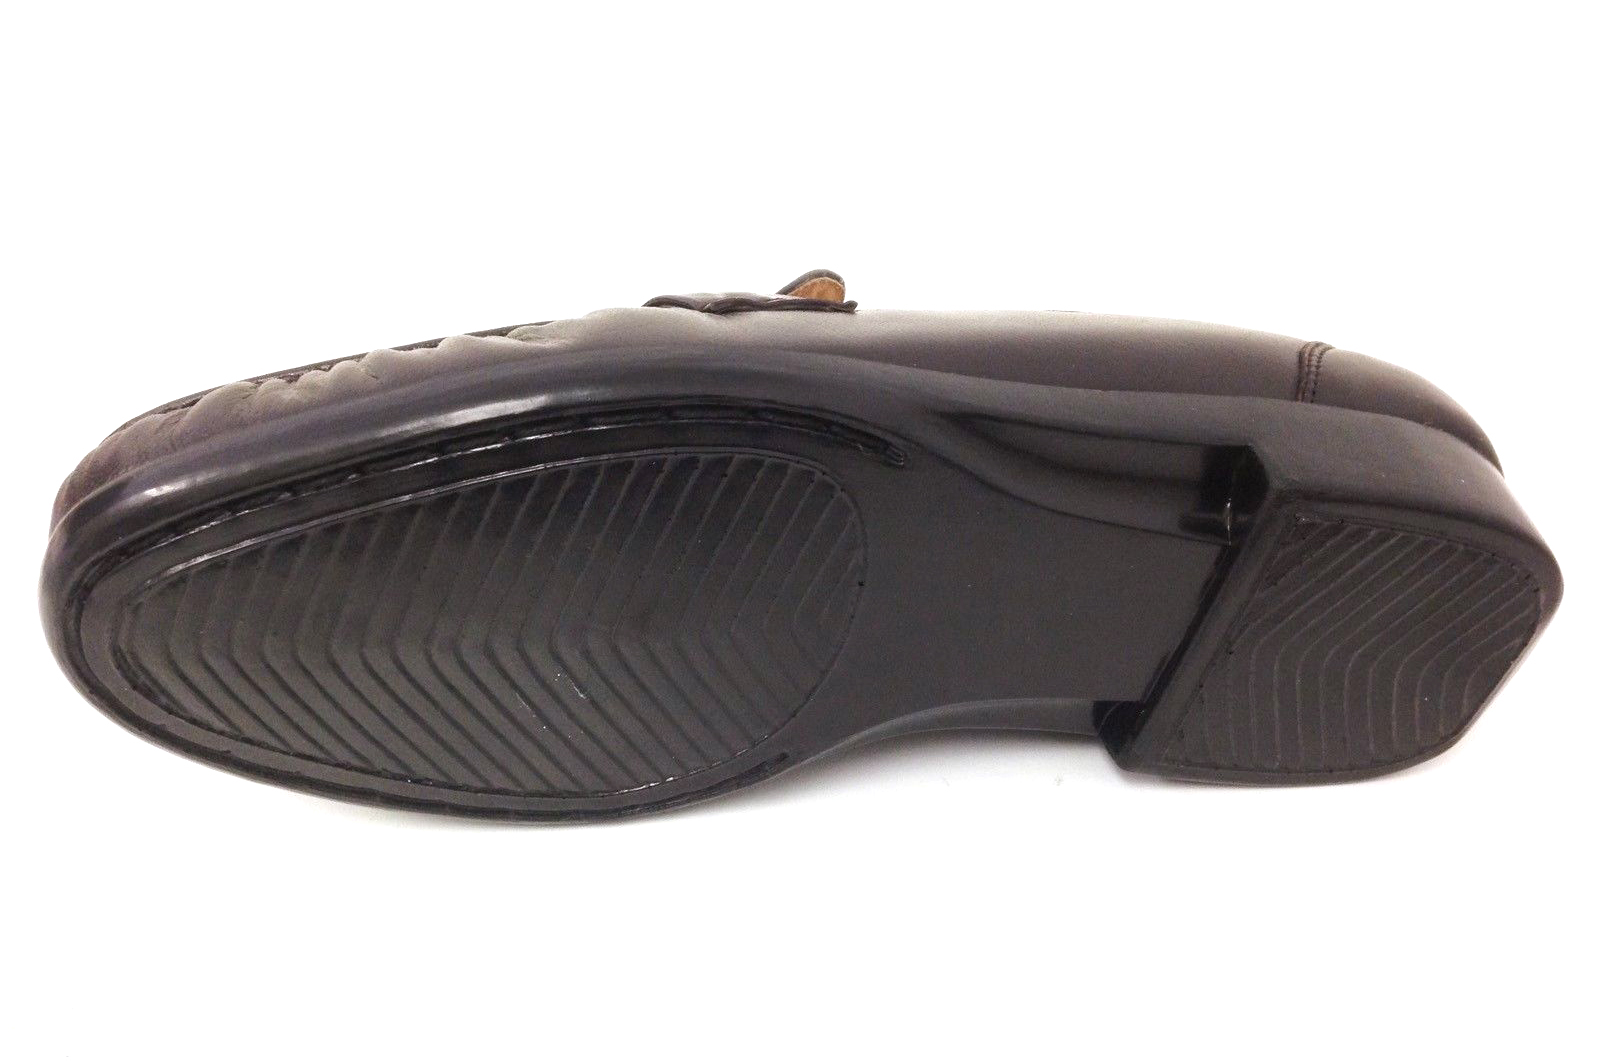 Men's Dress Loafers Leather Moc Toe Slip On Comfort Moccasin Shoes - image 3 of 3